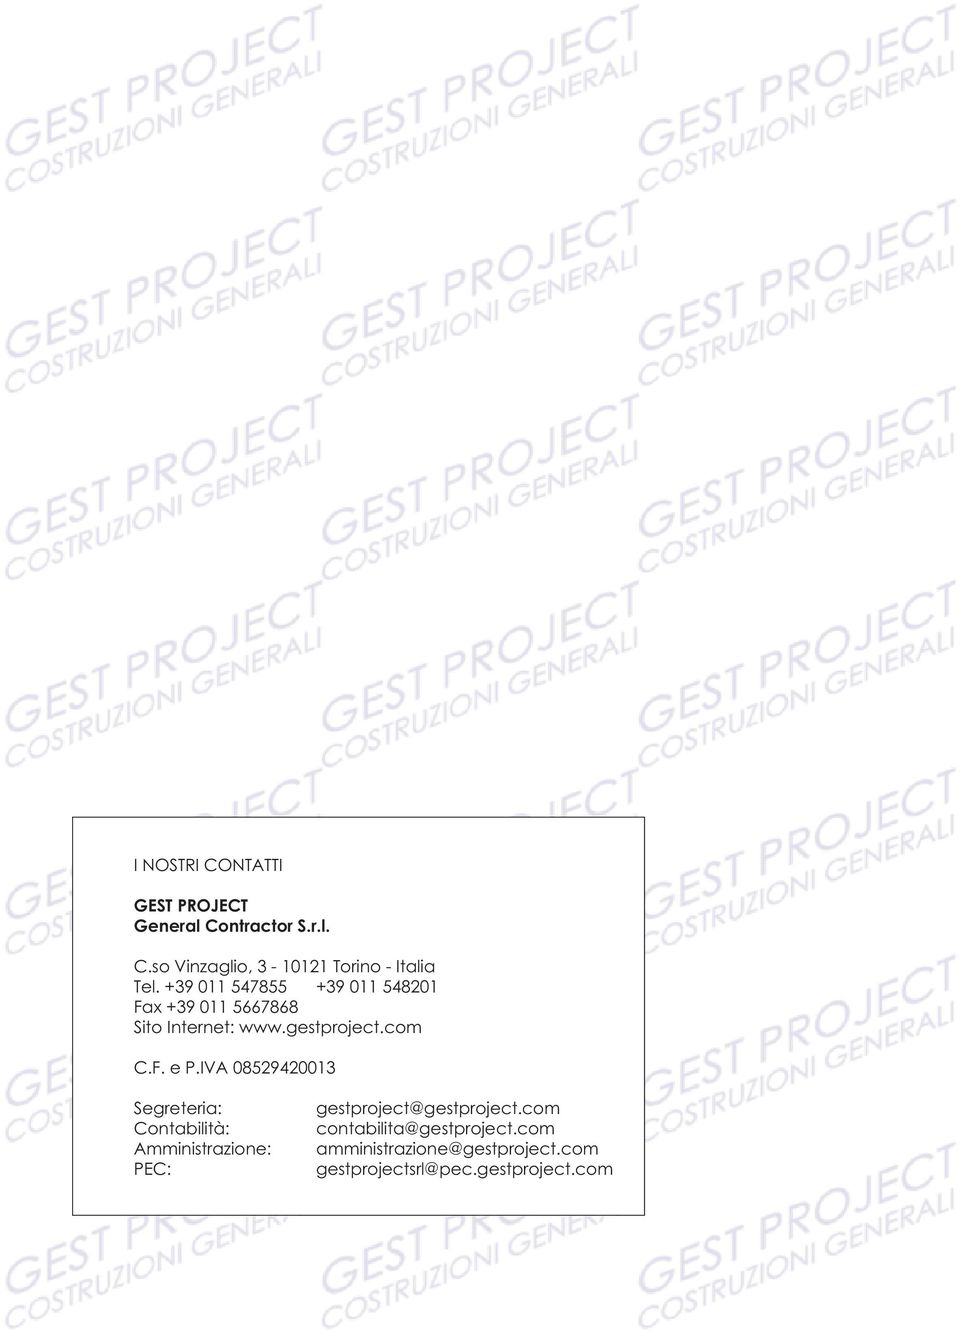 IVA 08529420013 Segreteria: Contabilità: Amministrazione: PEC: gestproject@gestproject.